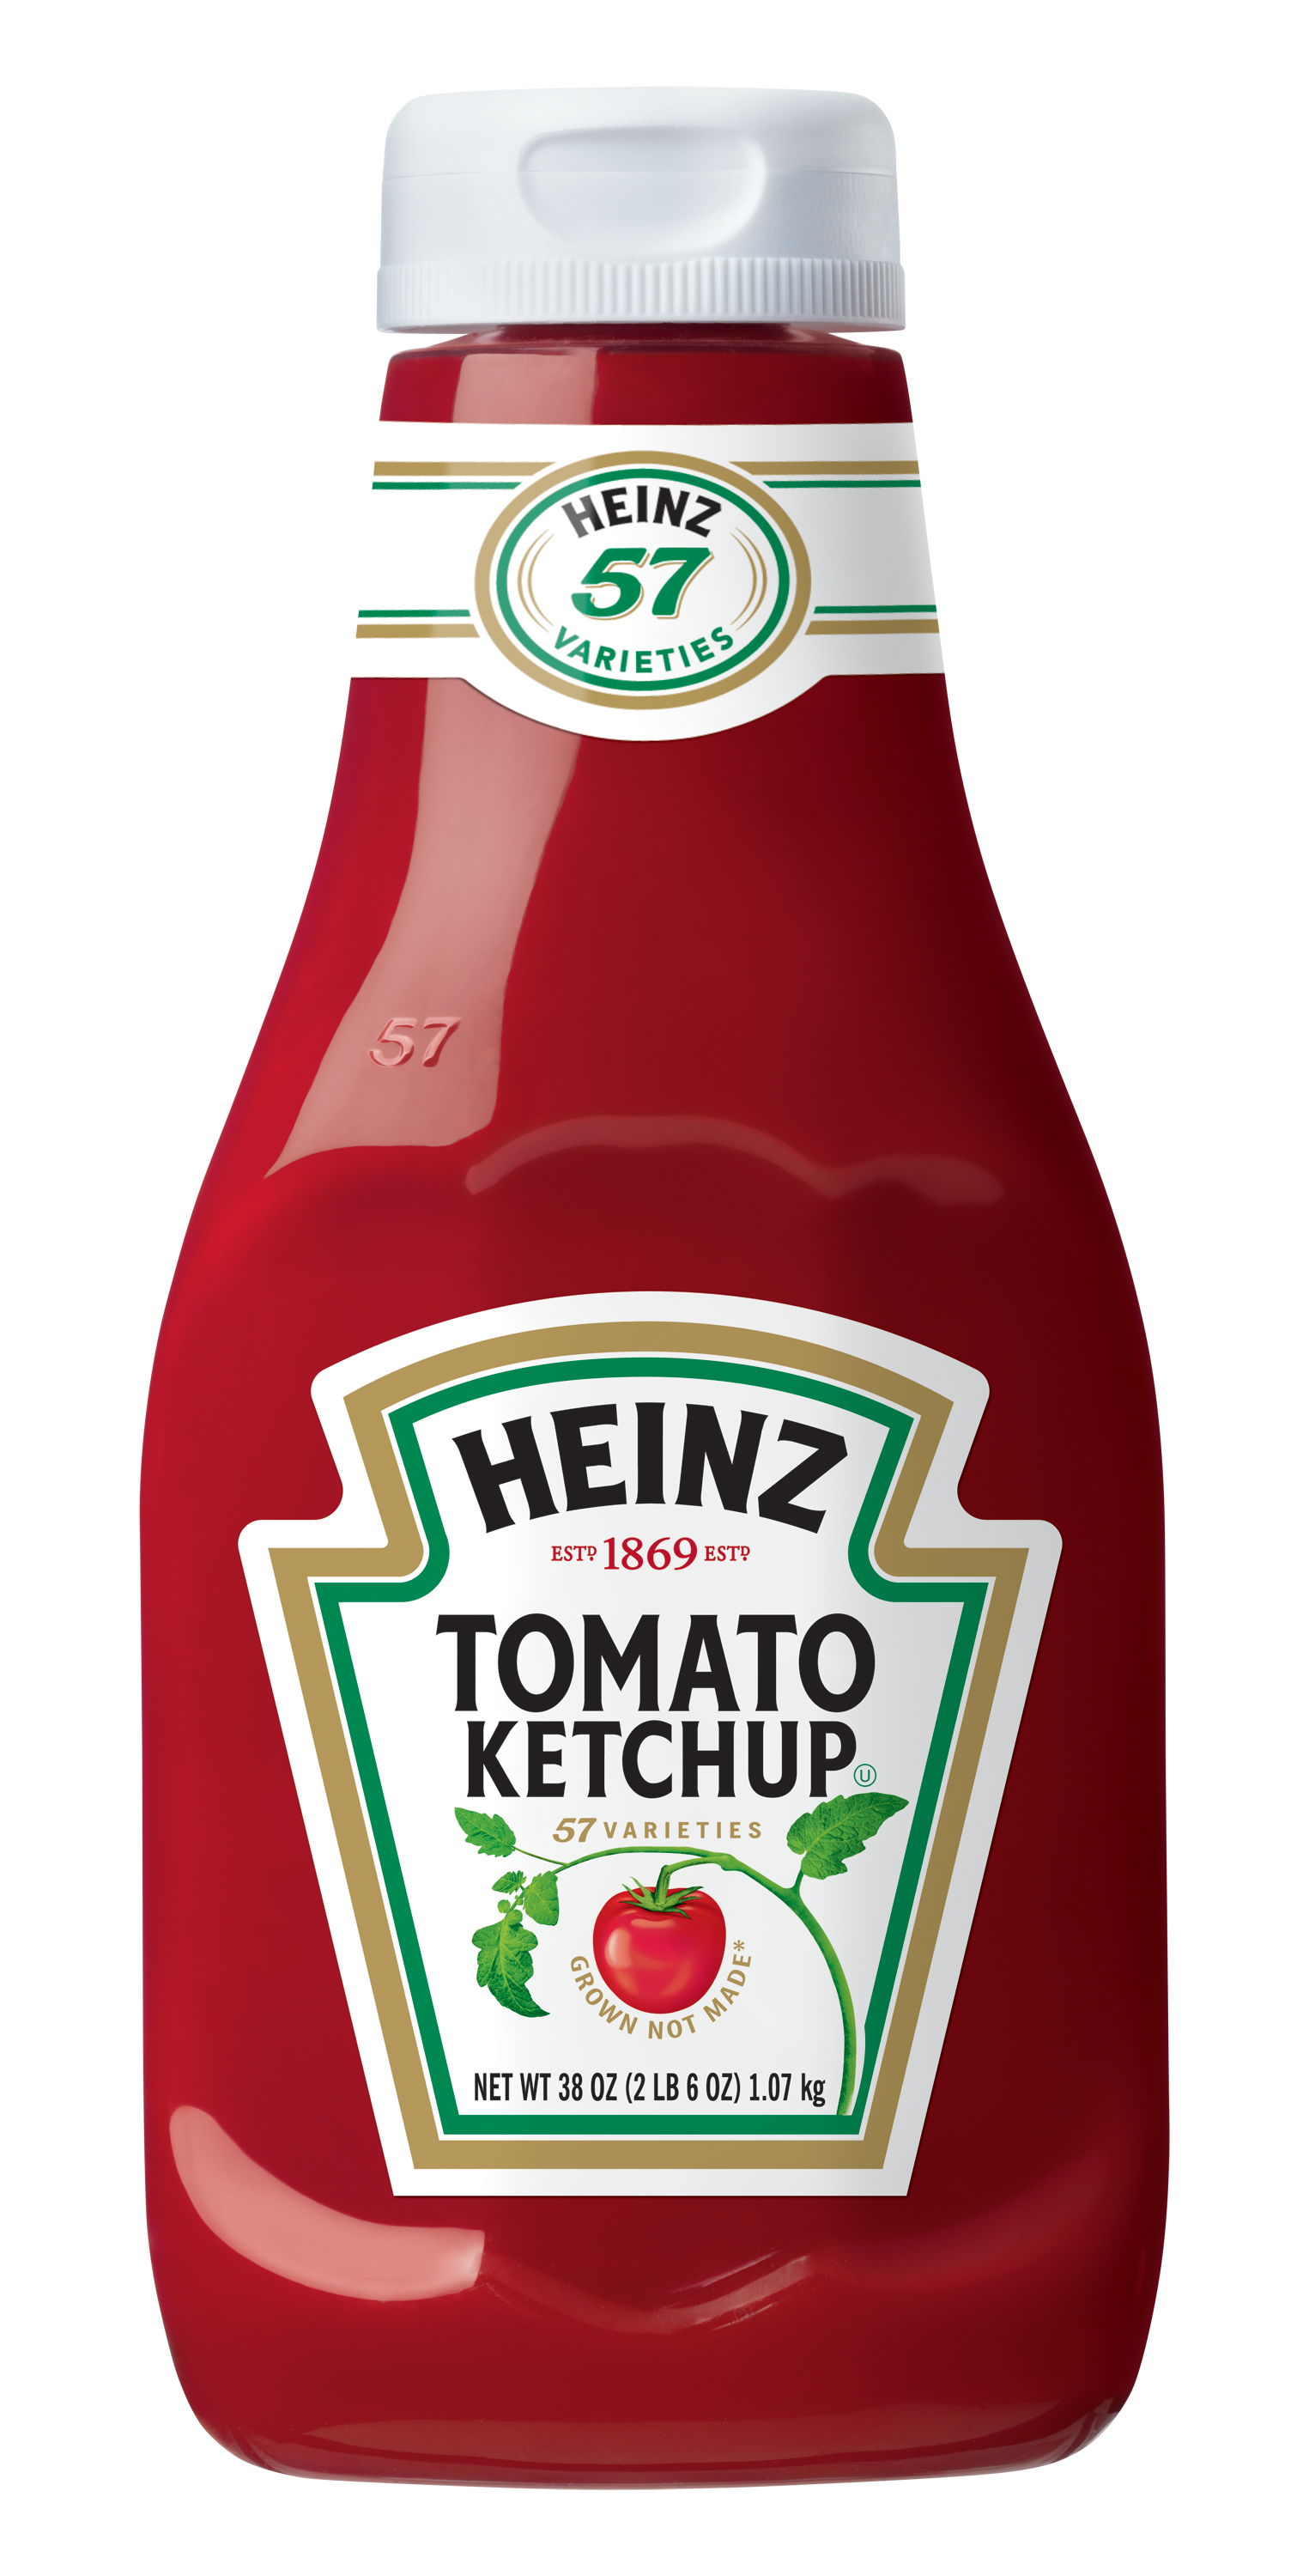 Ketchup Download Free PNG